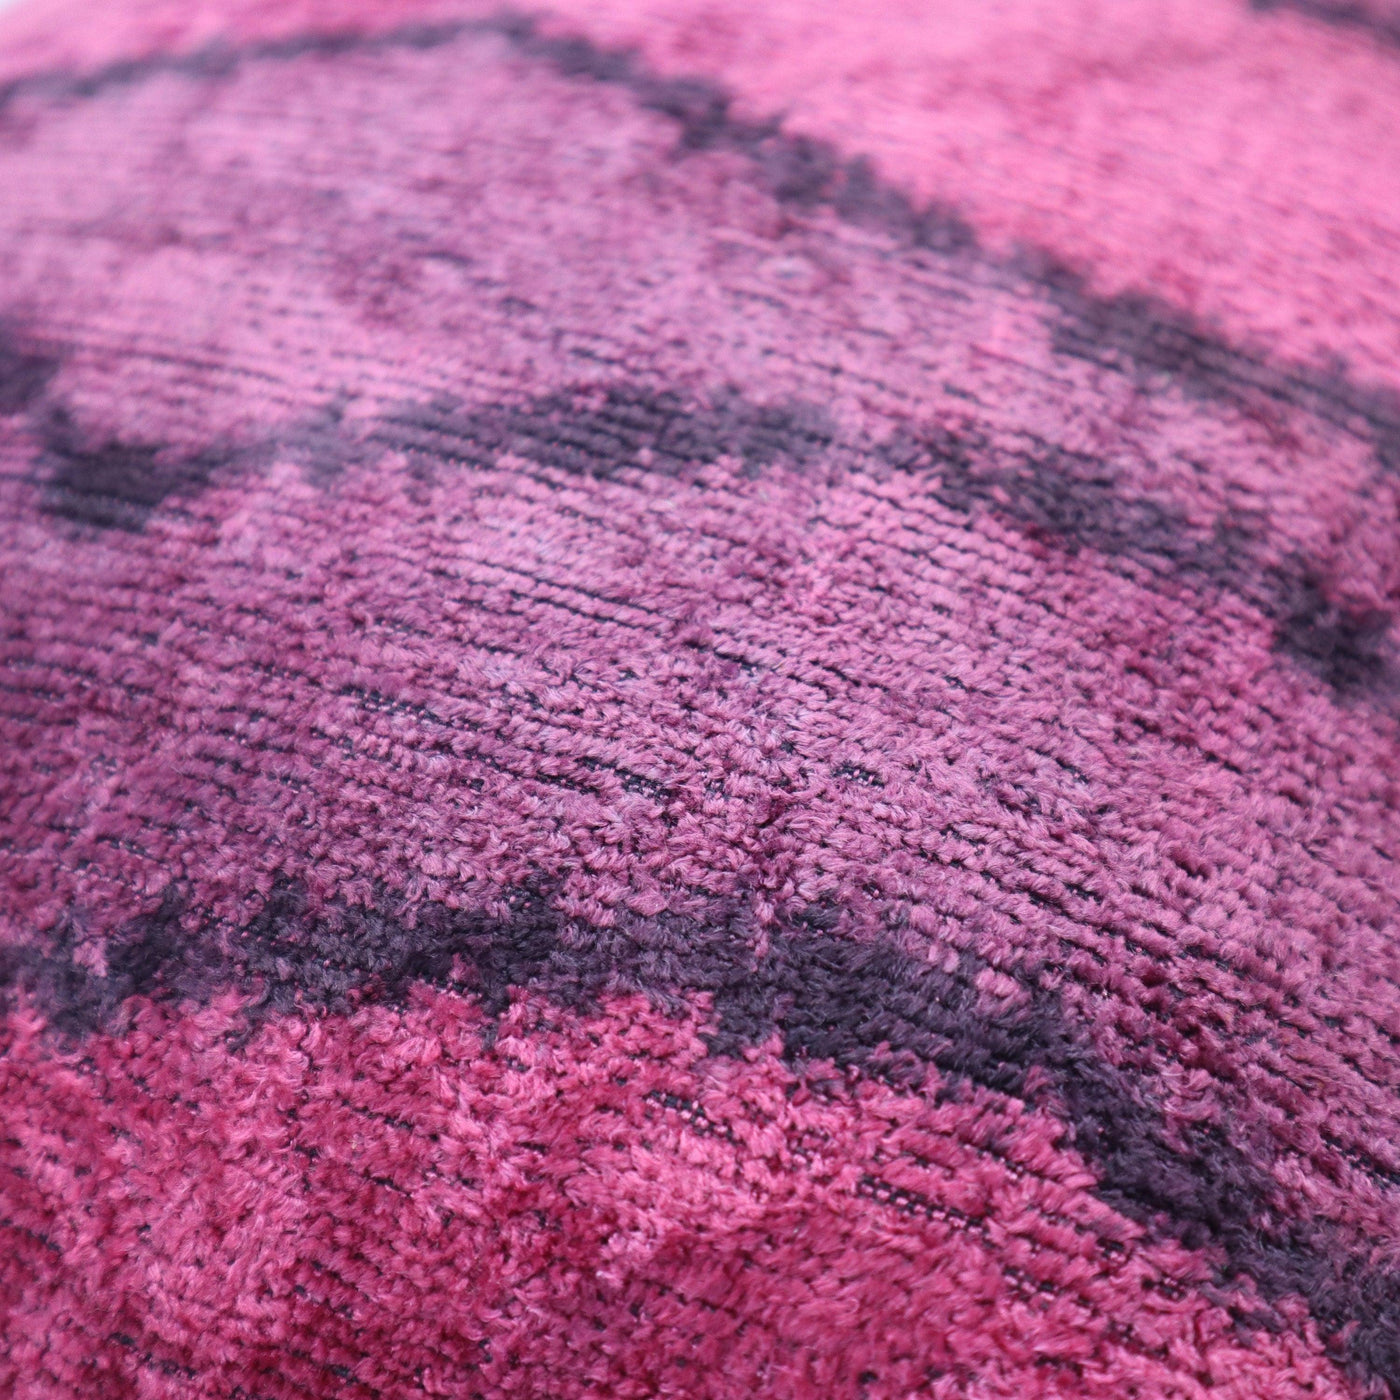 Canvello Handmade Luxury Pink Throw Pillows - 16x24